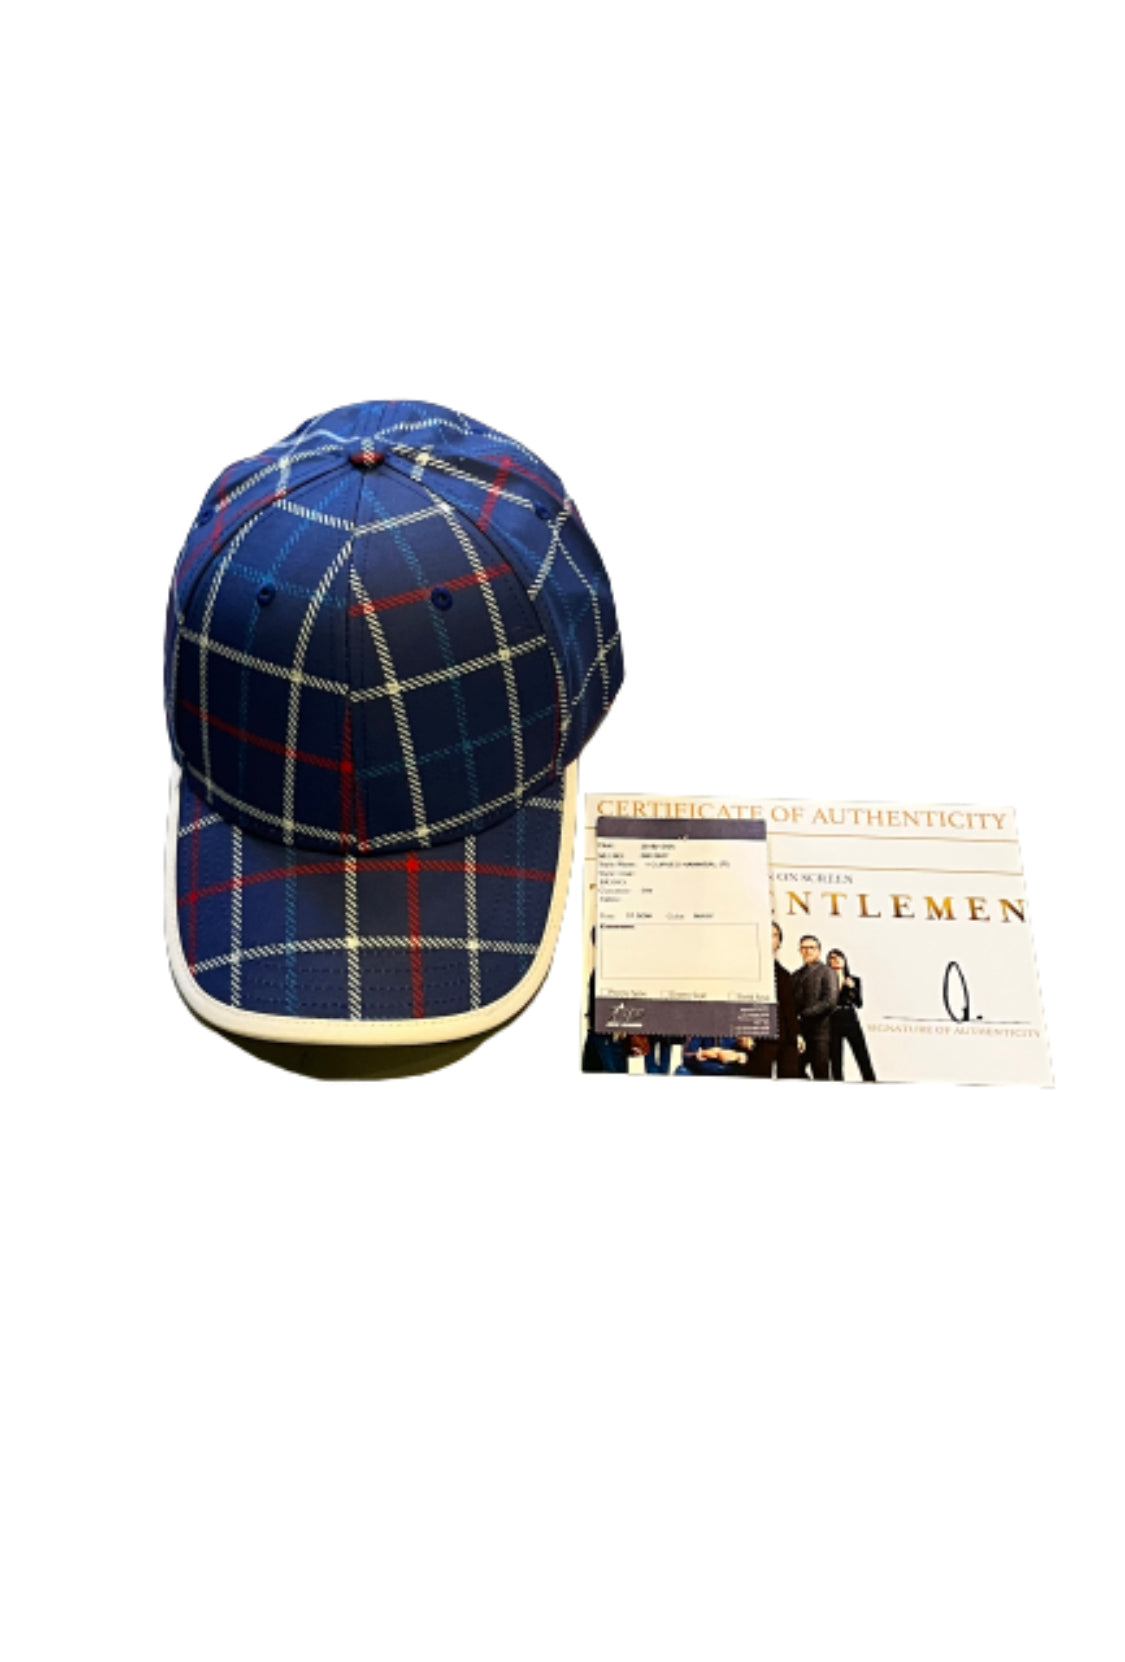 THE GENTLEMEN: Hannibal’s Custom Plaid Leisure Suit Matching Adjustable Back Hat